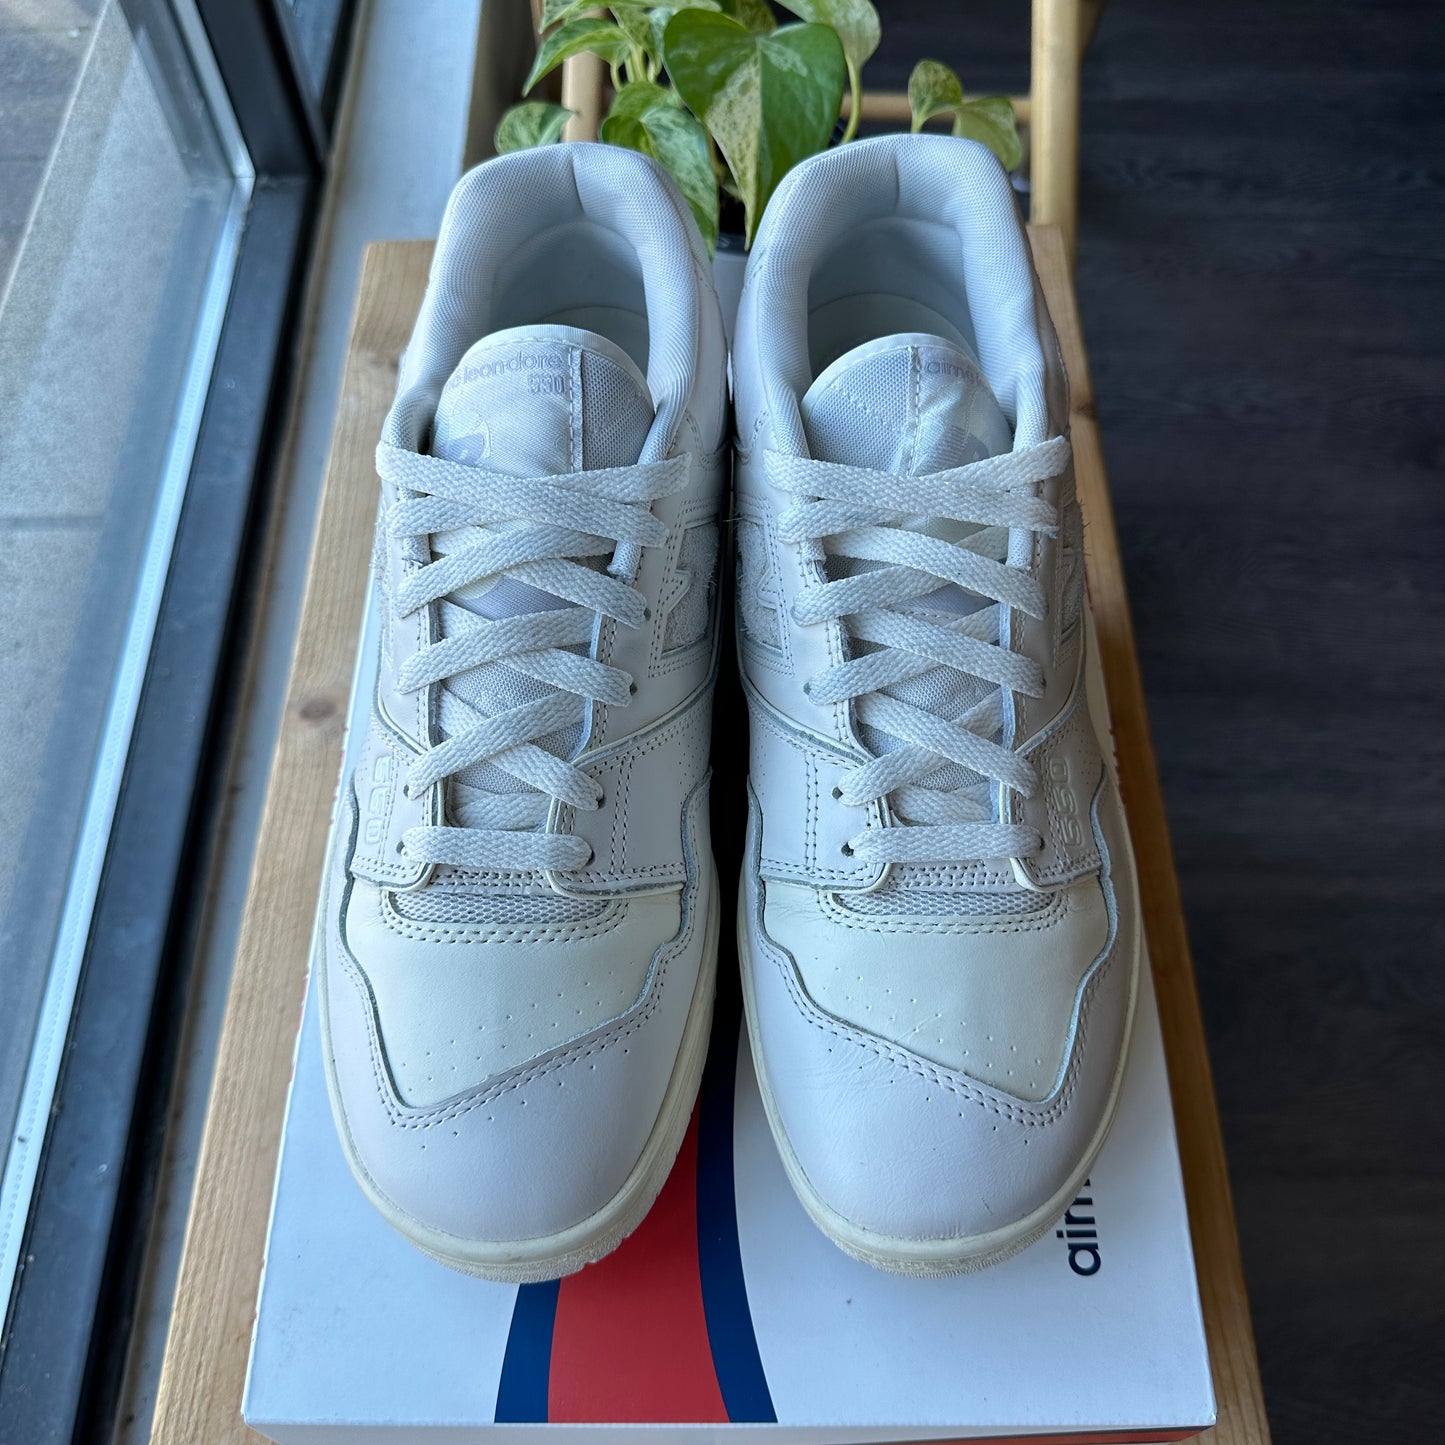 New Balance x Aime Leon Dore 550 'White Leather' Size 10.5